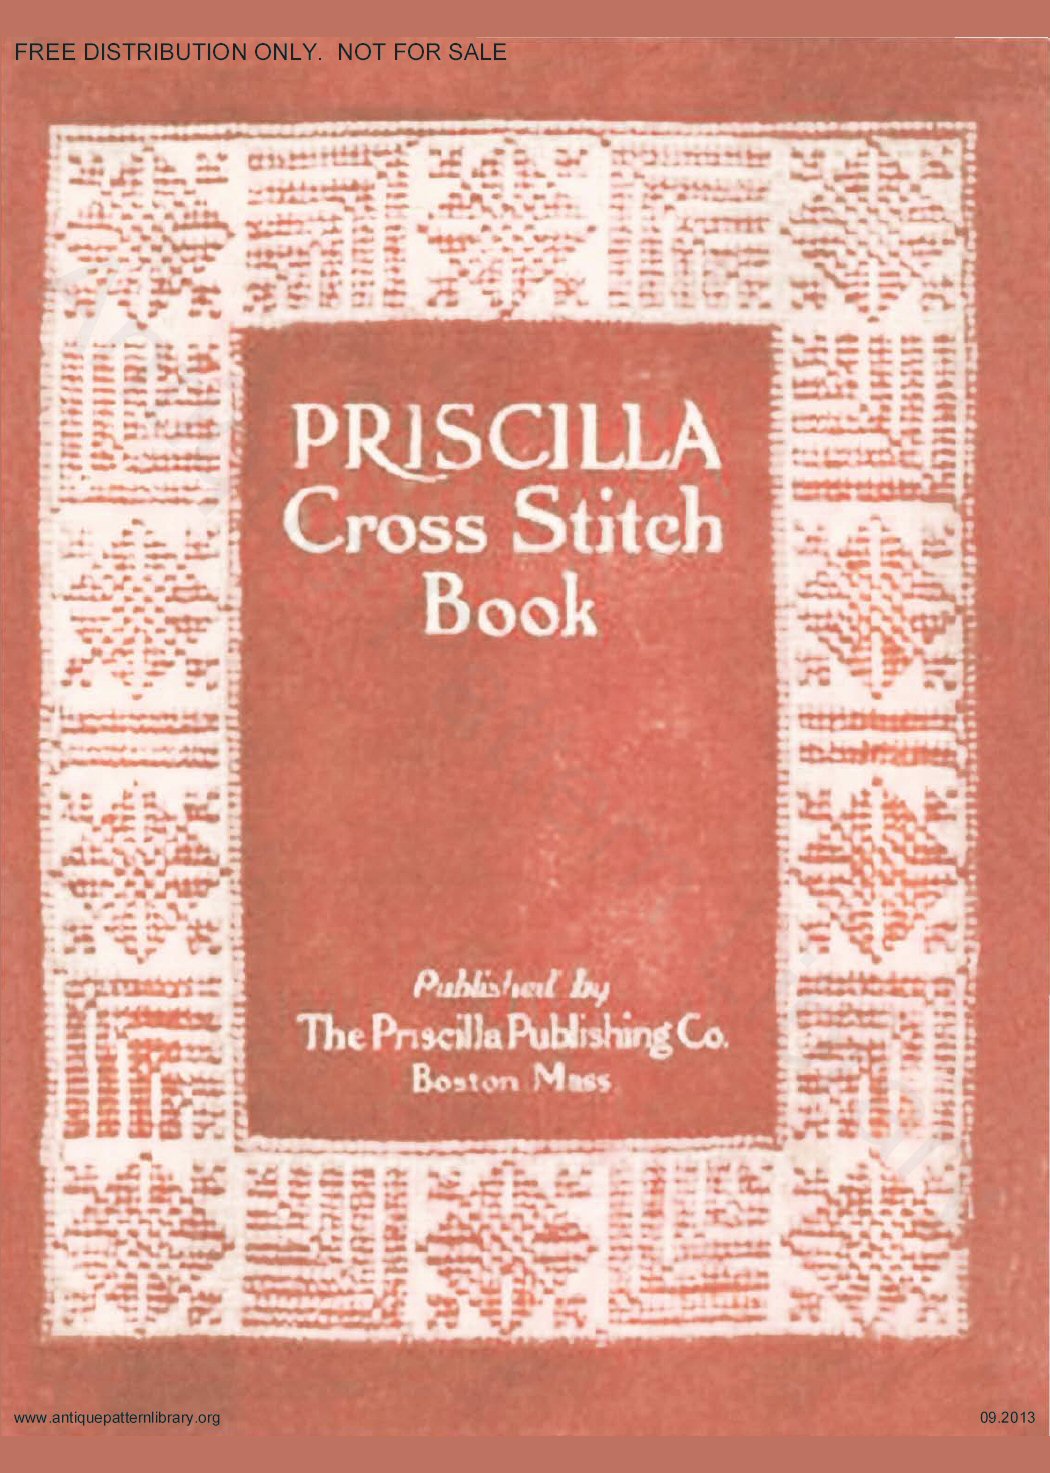 6-JA013 Priscilla Cross Stitch Book